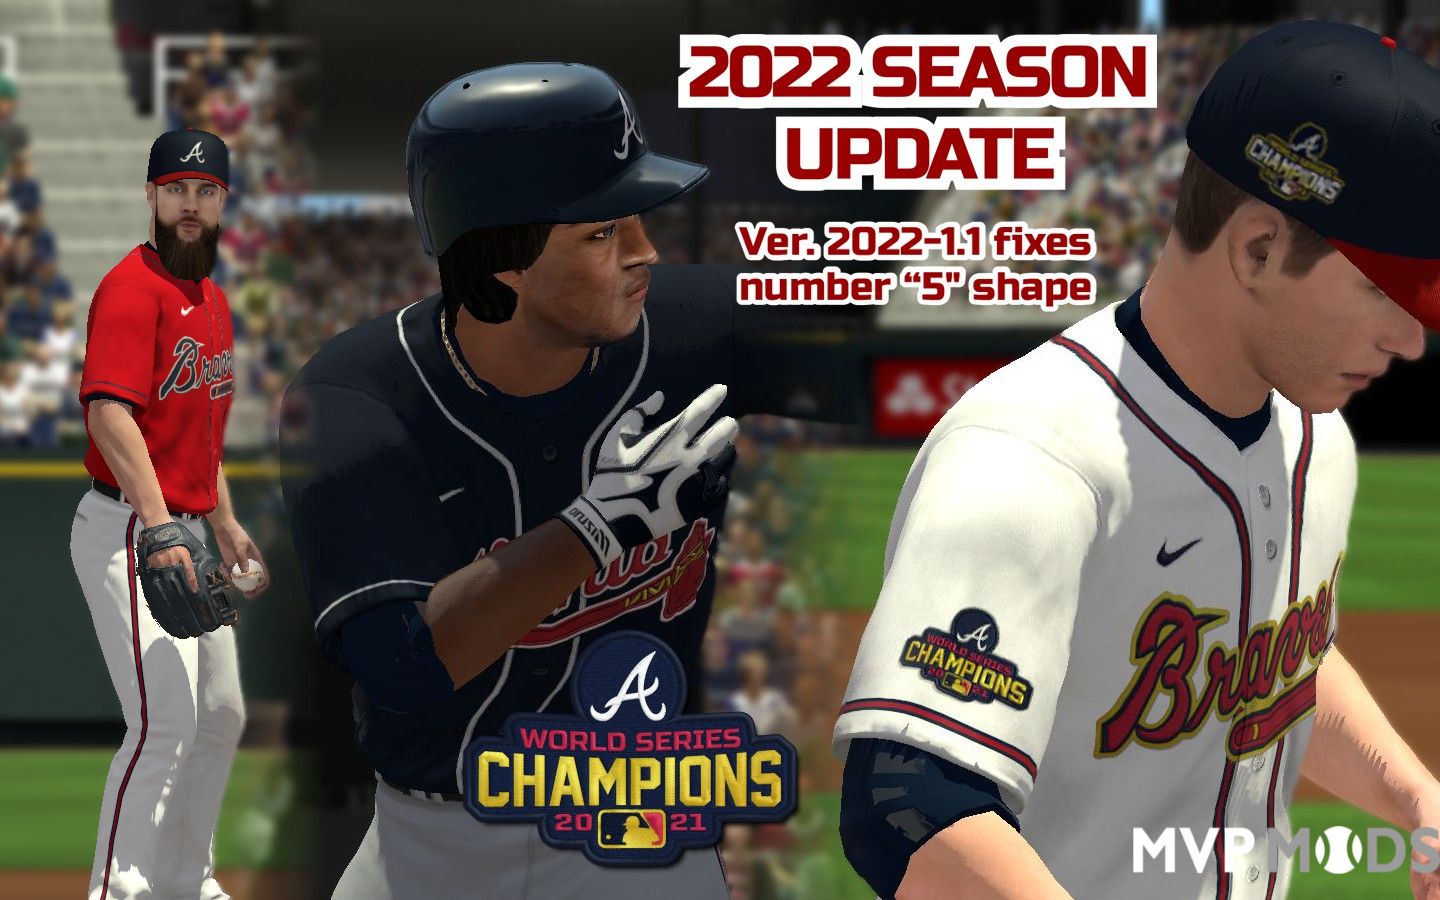 2021 Atlanta Braves uniforms - Uniforms - MVP Mods